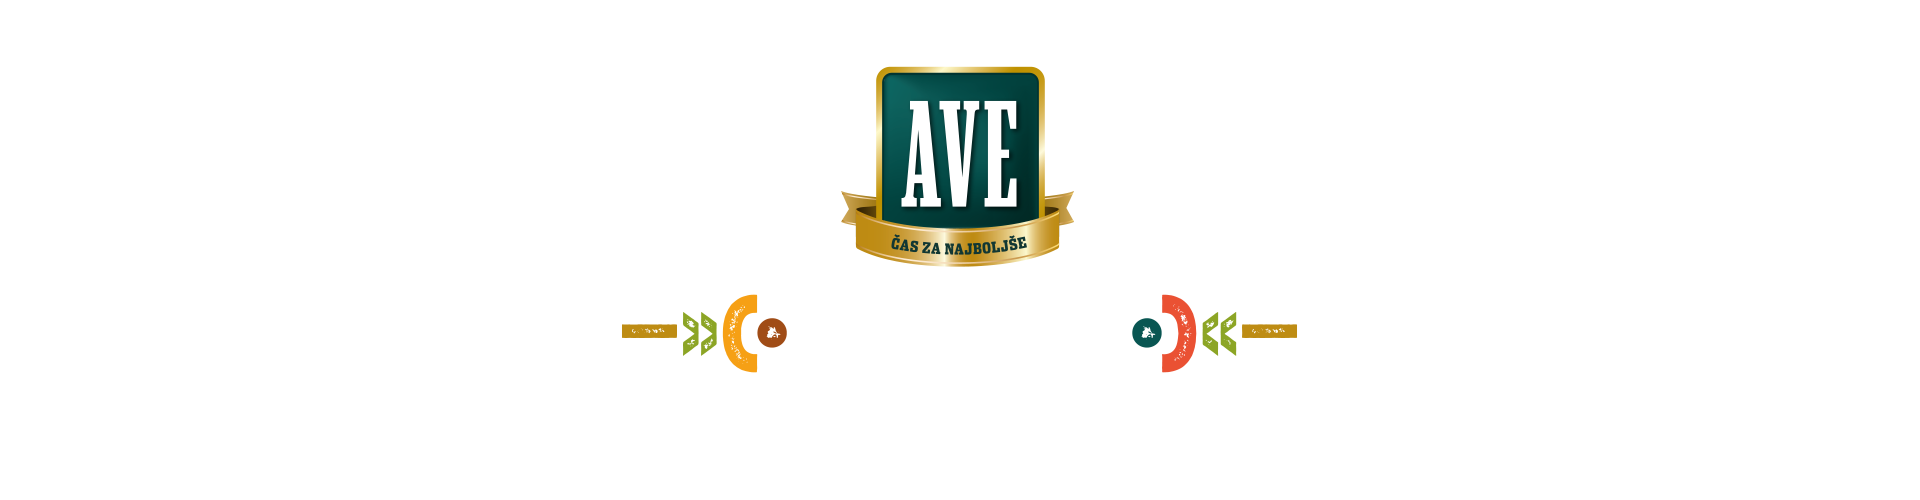 Projekt Ave Piknikvsehpiknikov Logo 0